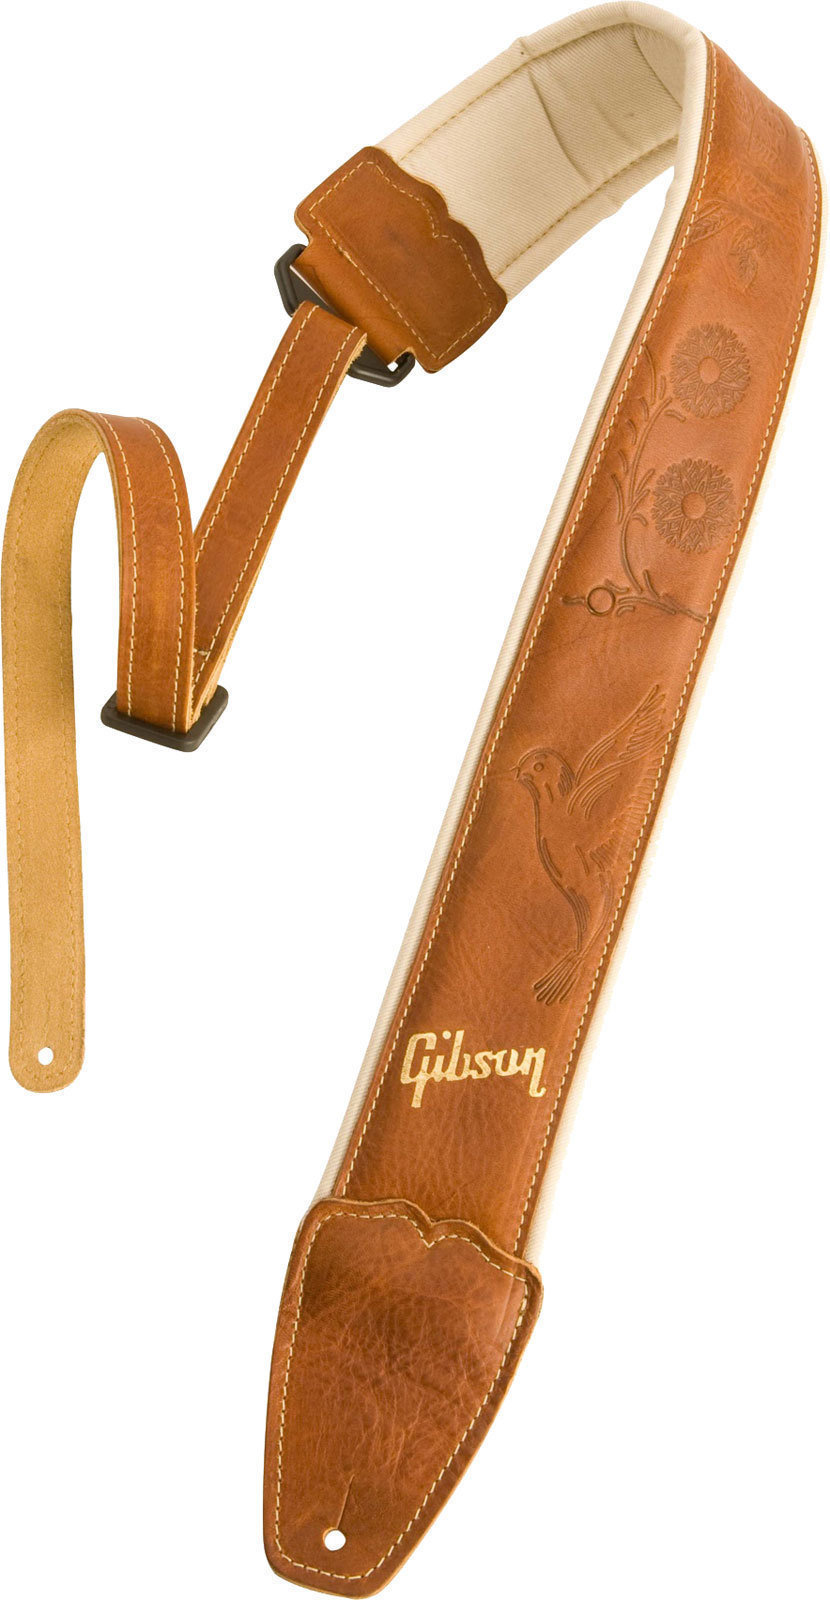 Leather guitar strap Gibson Montana Strap - Tan